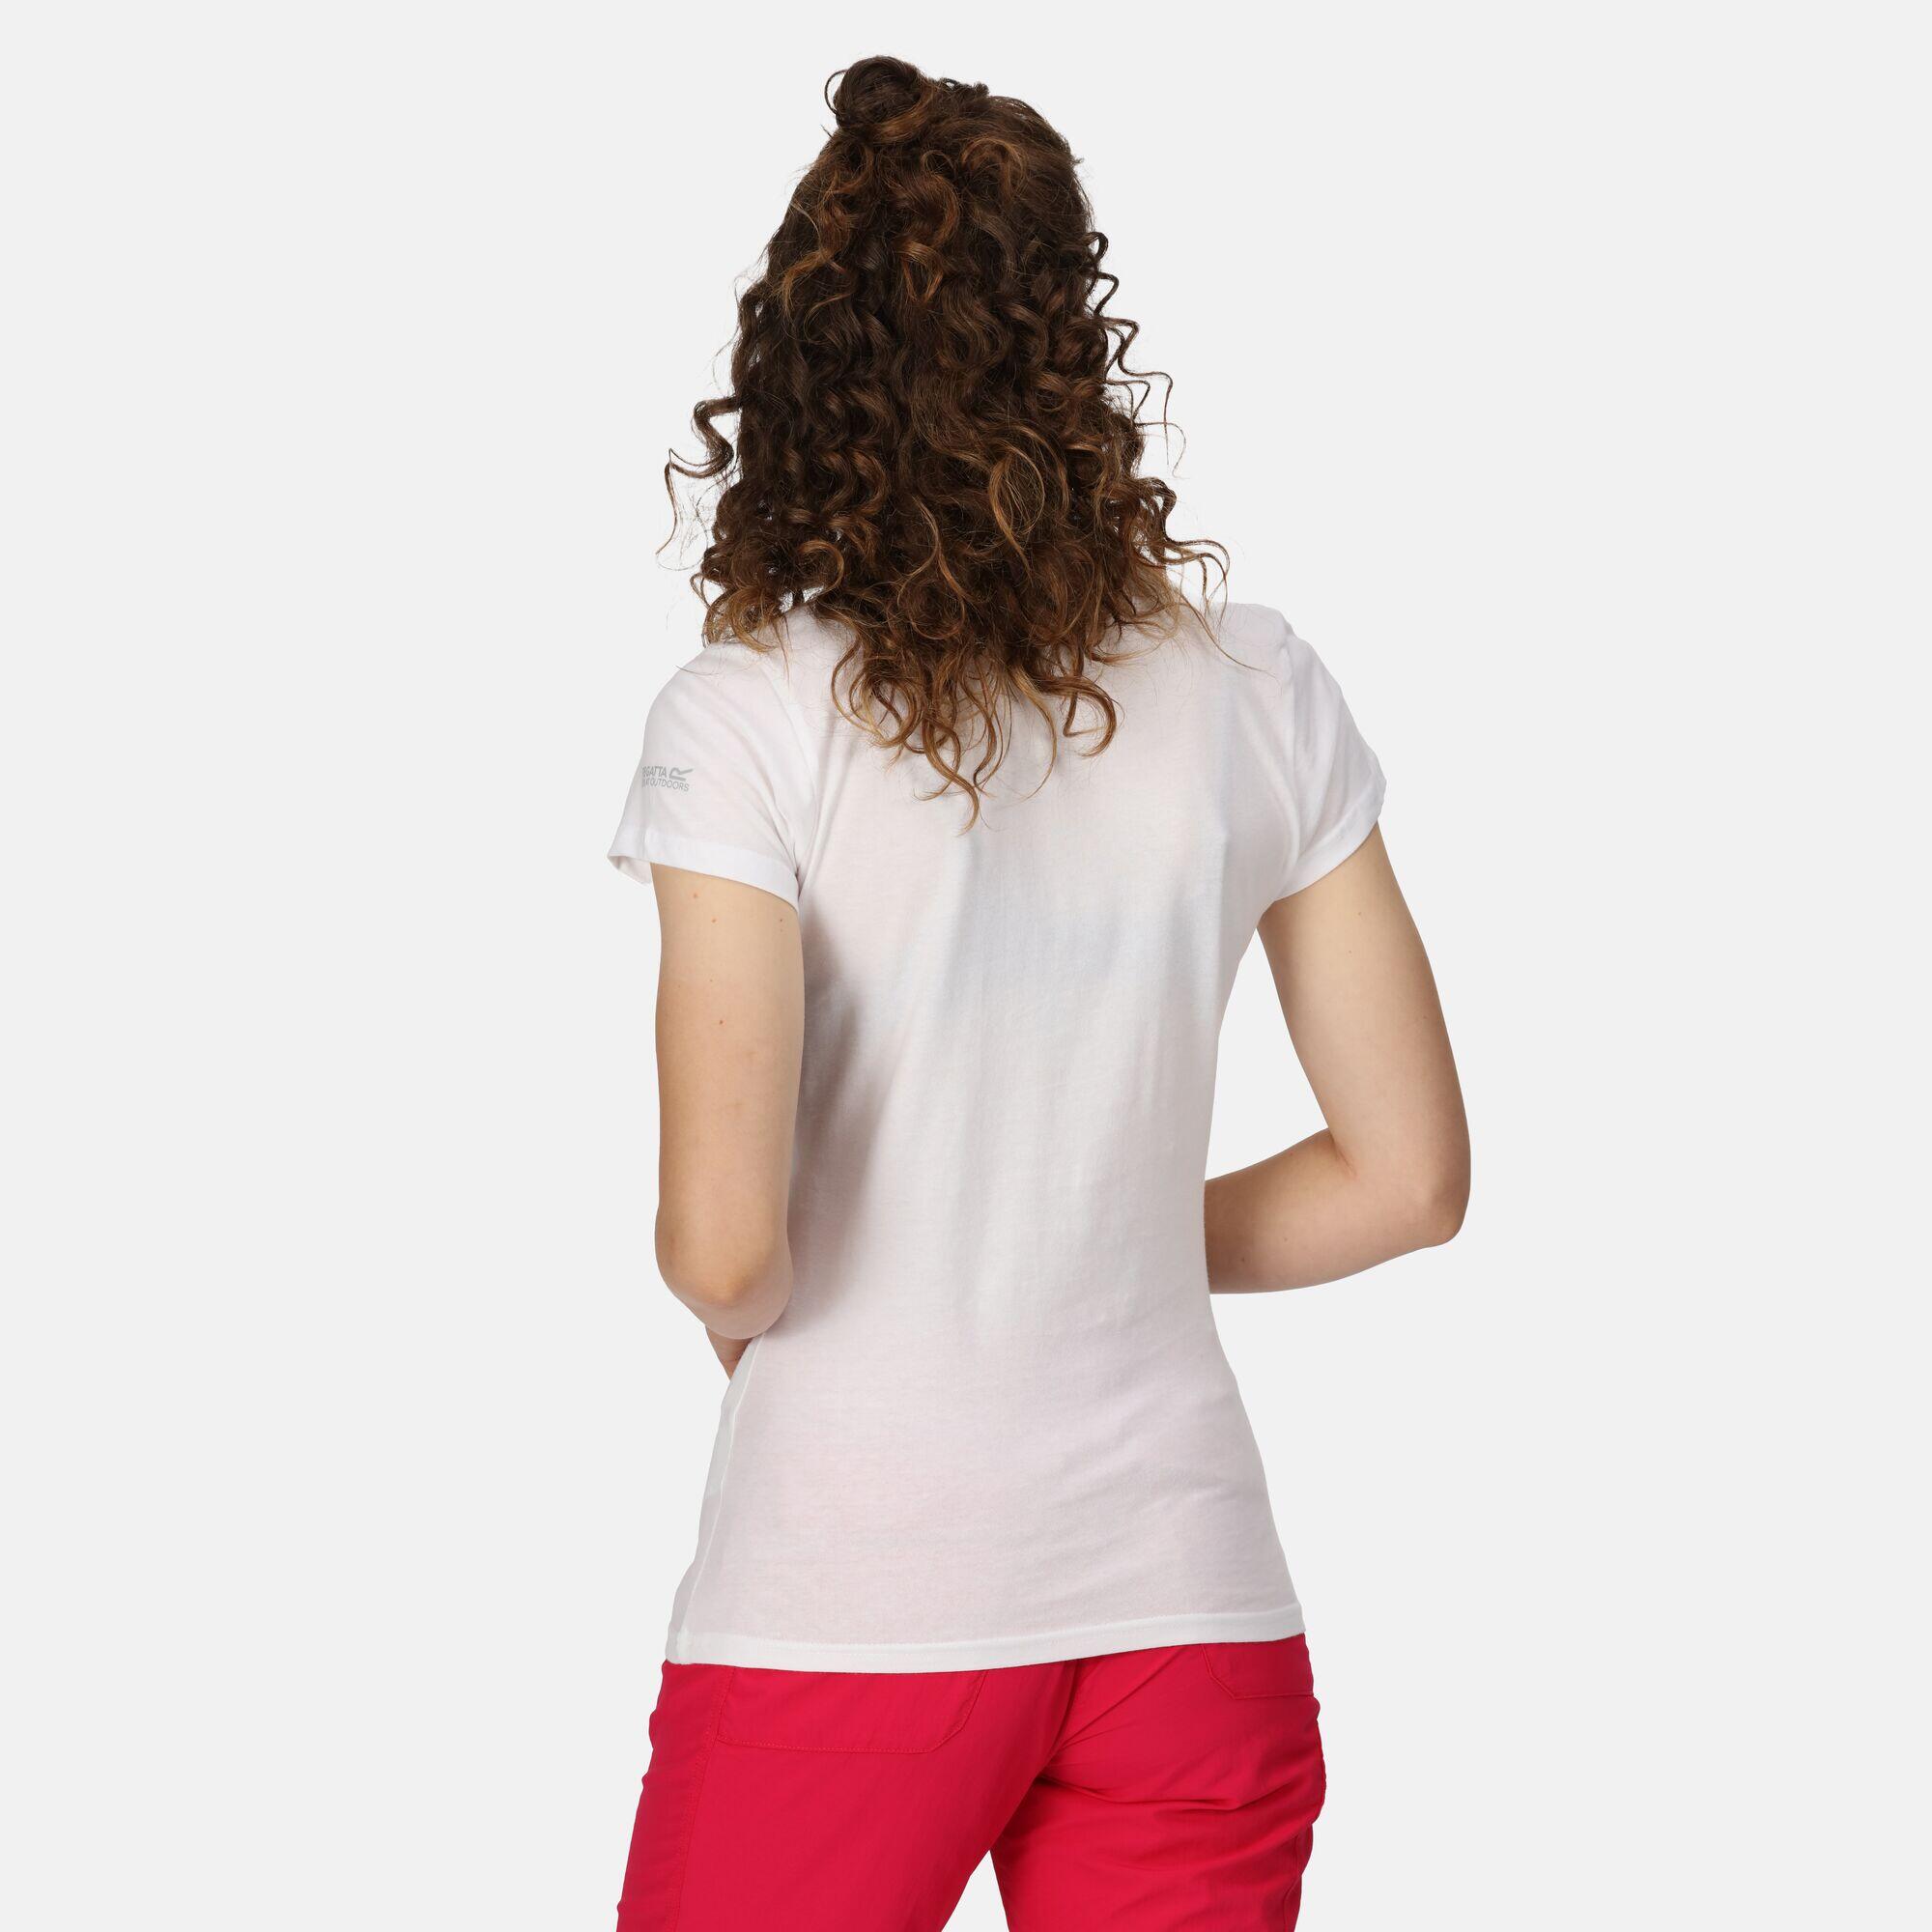 Sinton Women's Fitness T-Shirt - White 2/5